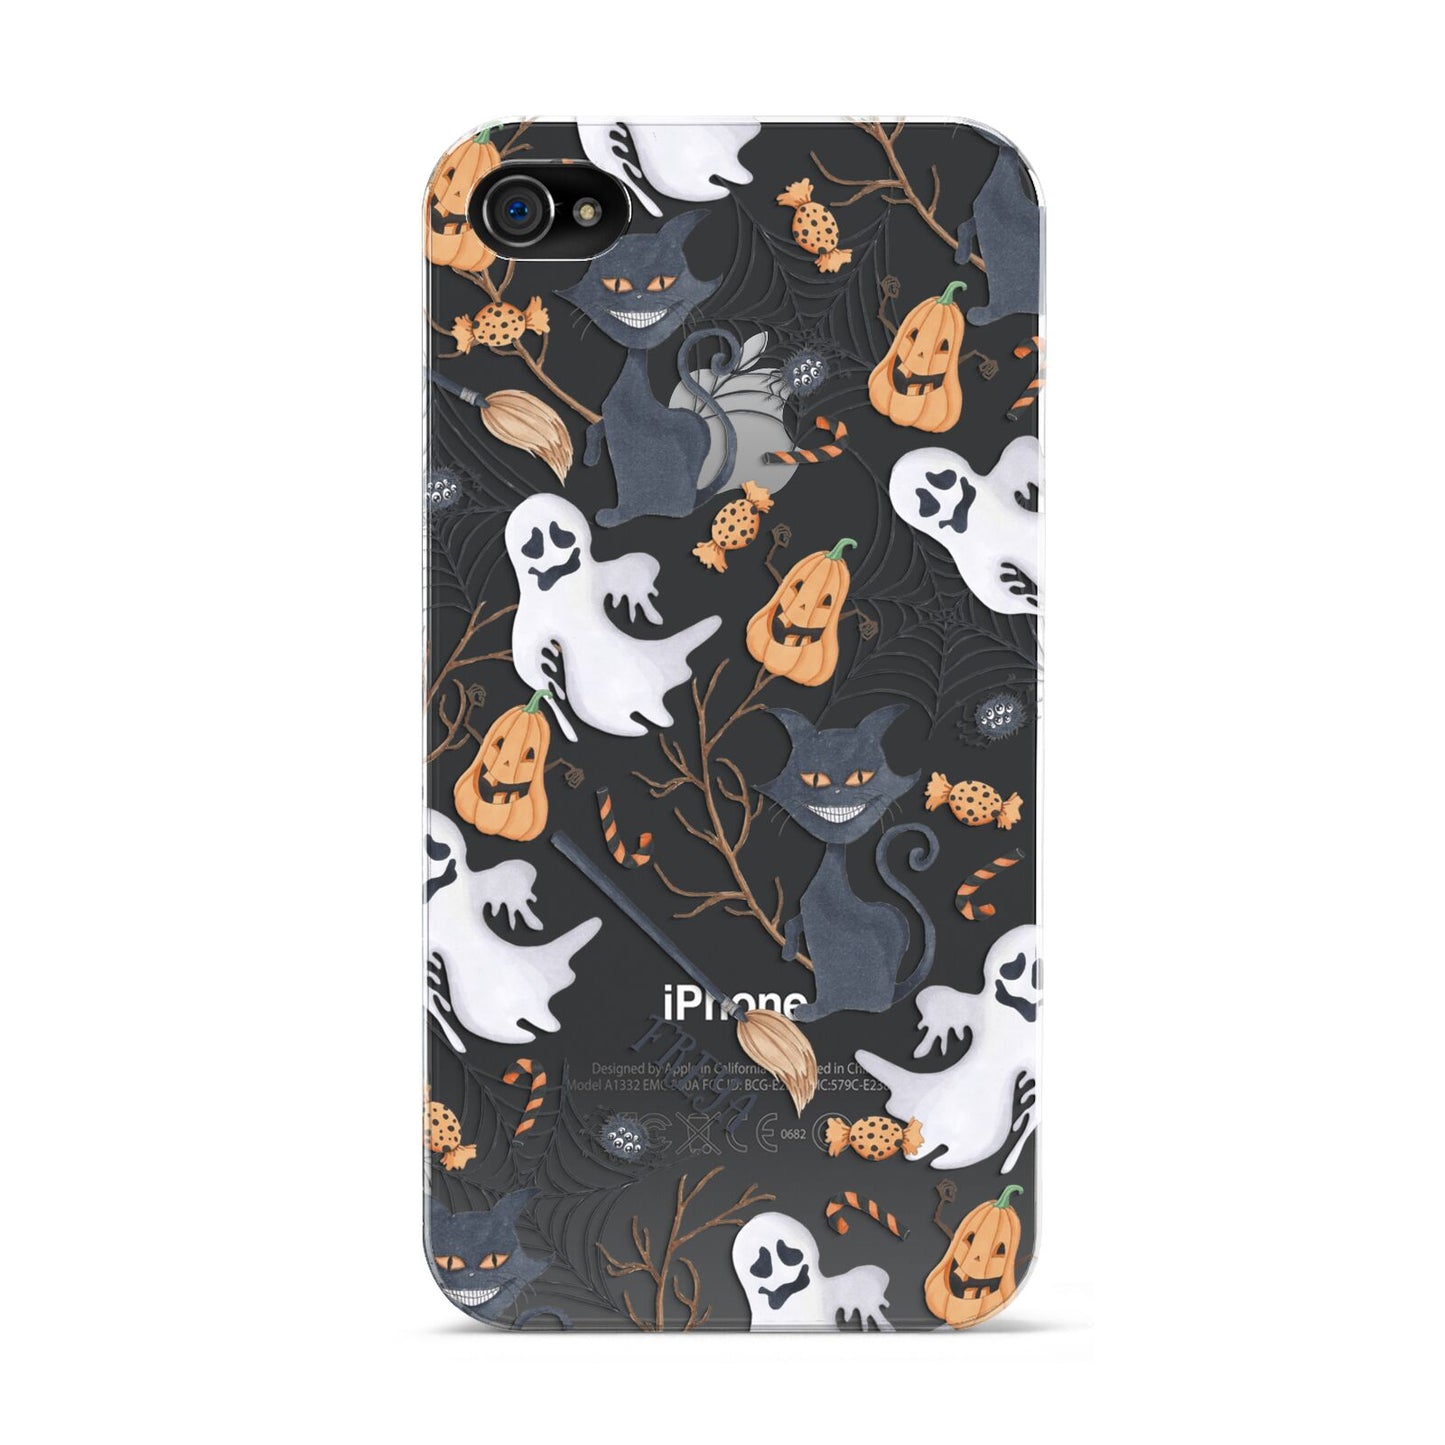 Grinning Cat Halloween Apple iPhone 4s Case